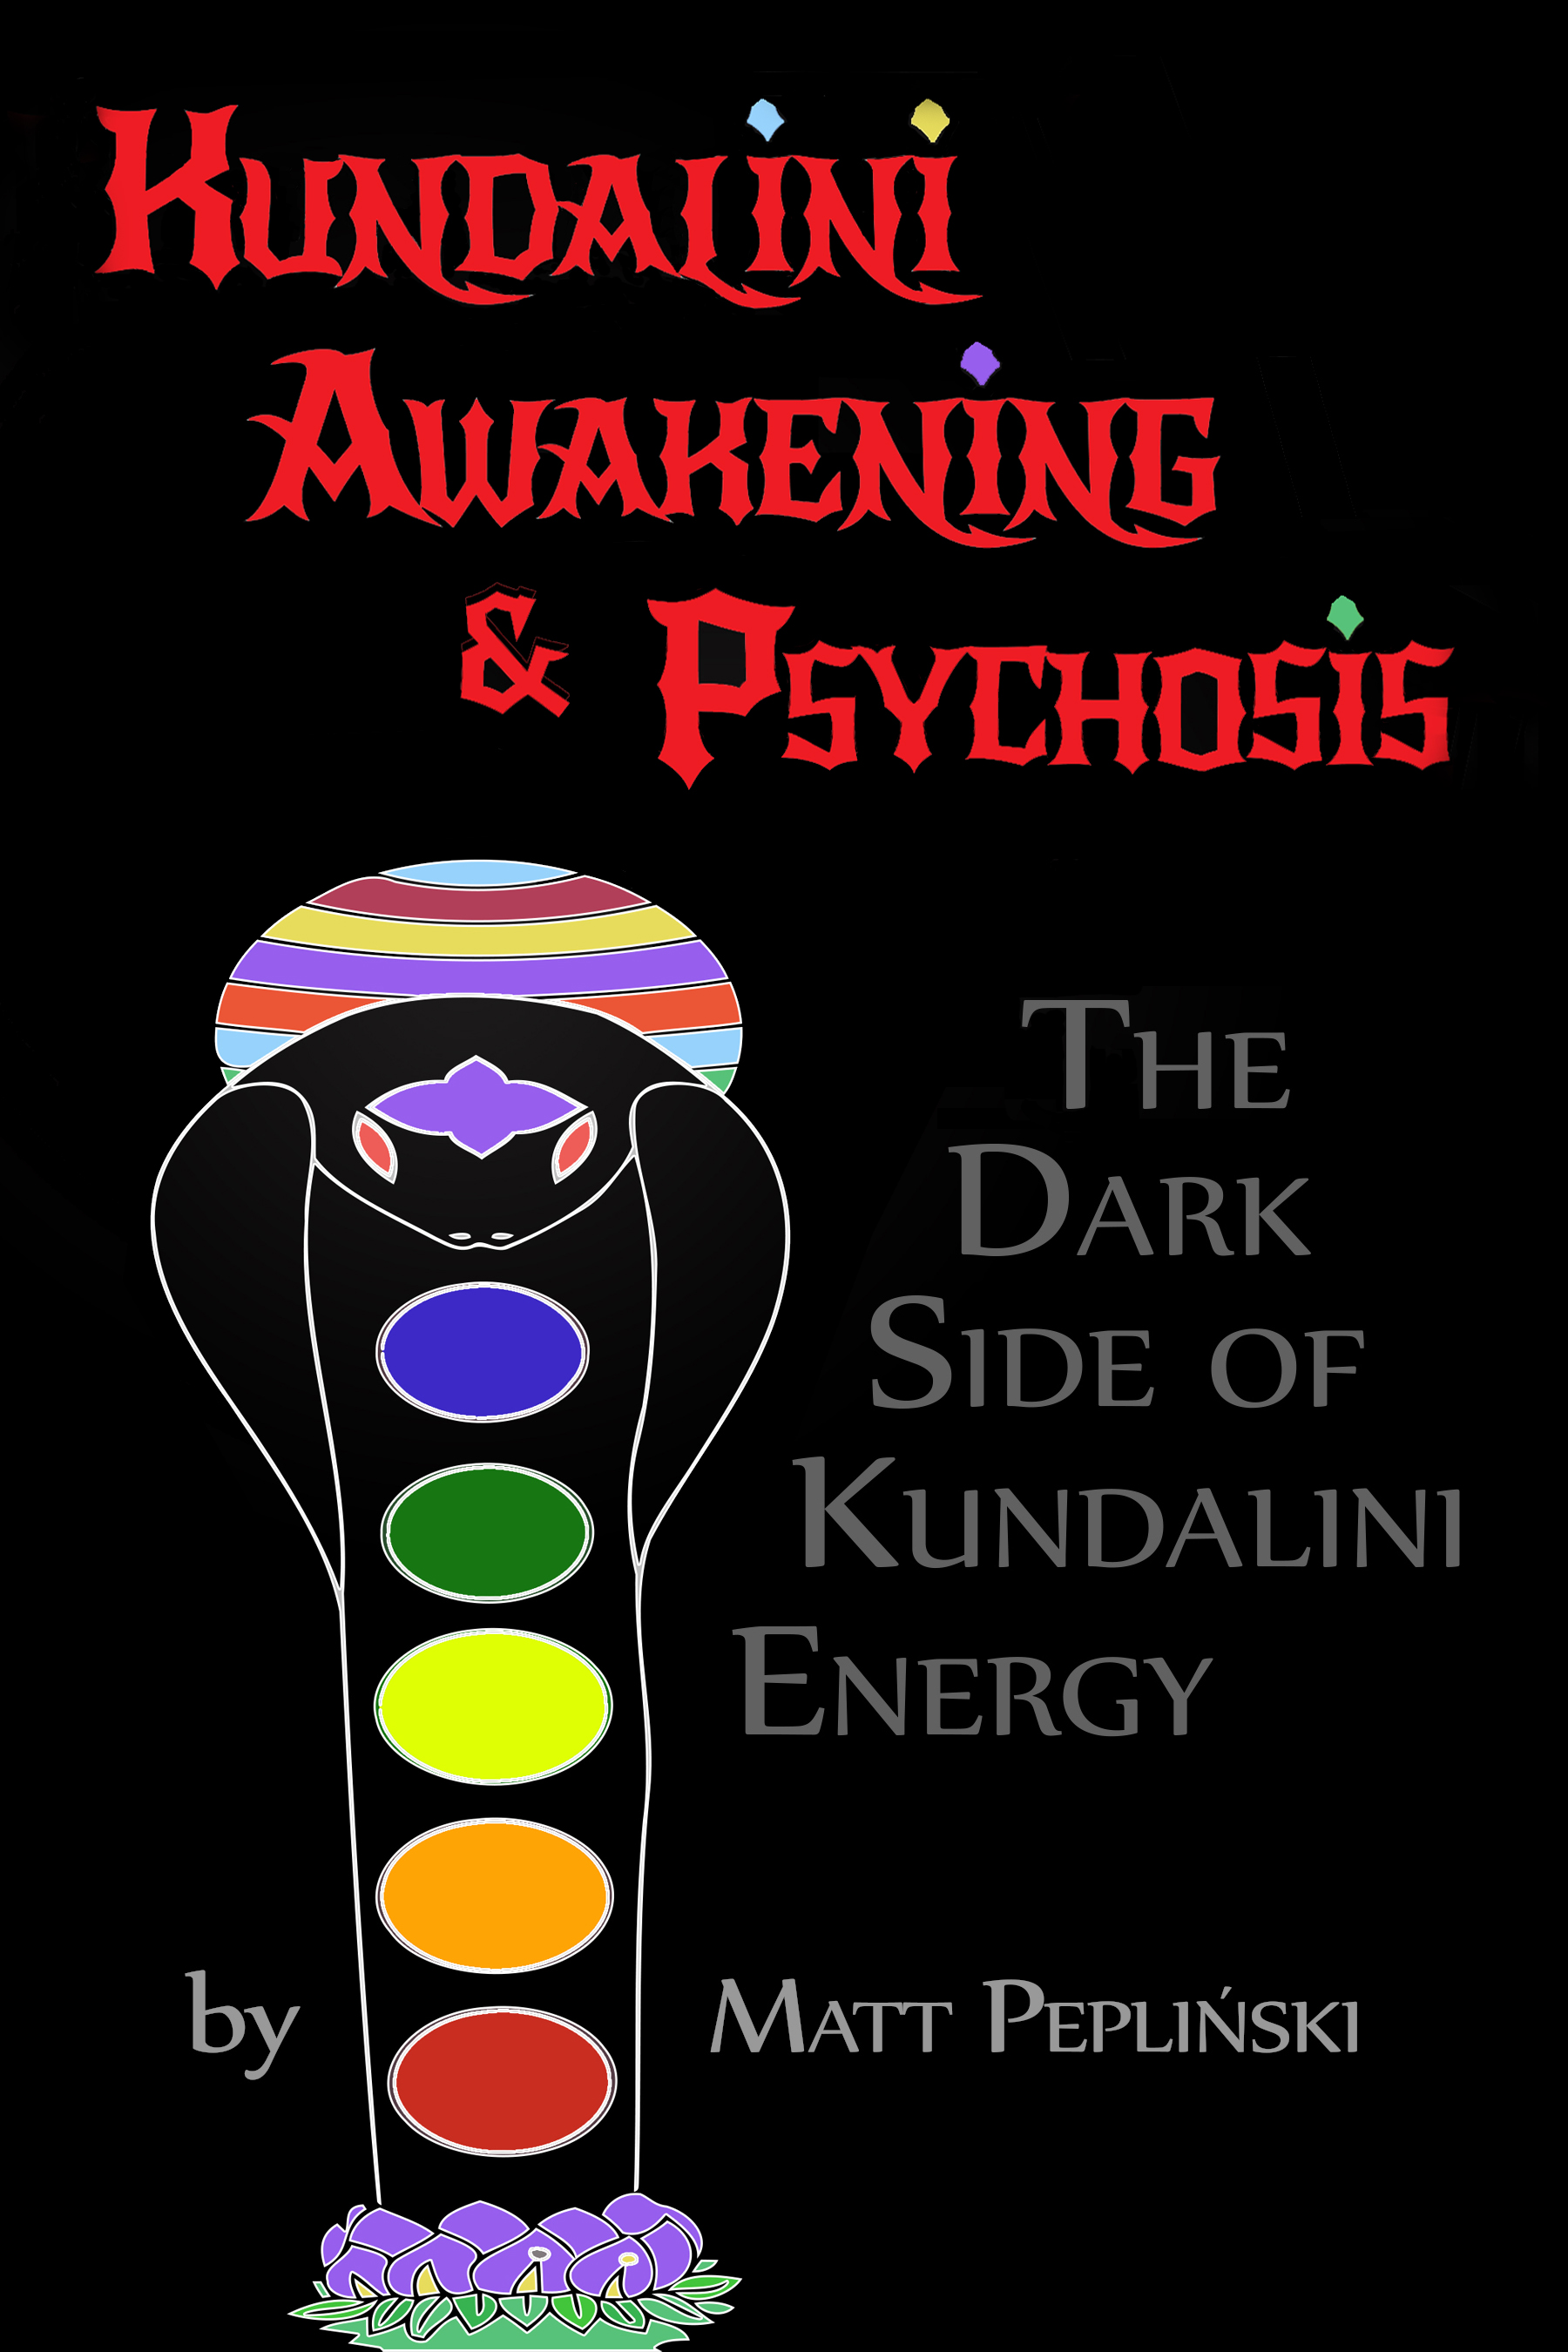 FREE: Kundalini awakening & psychosis by Matt Peplinski